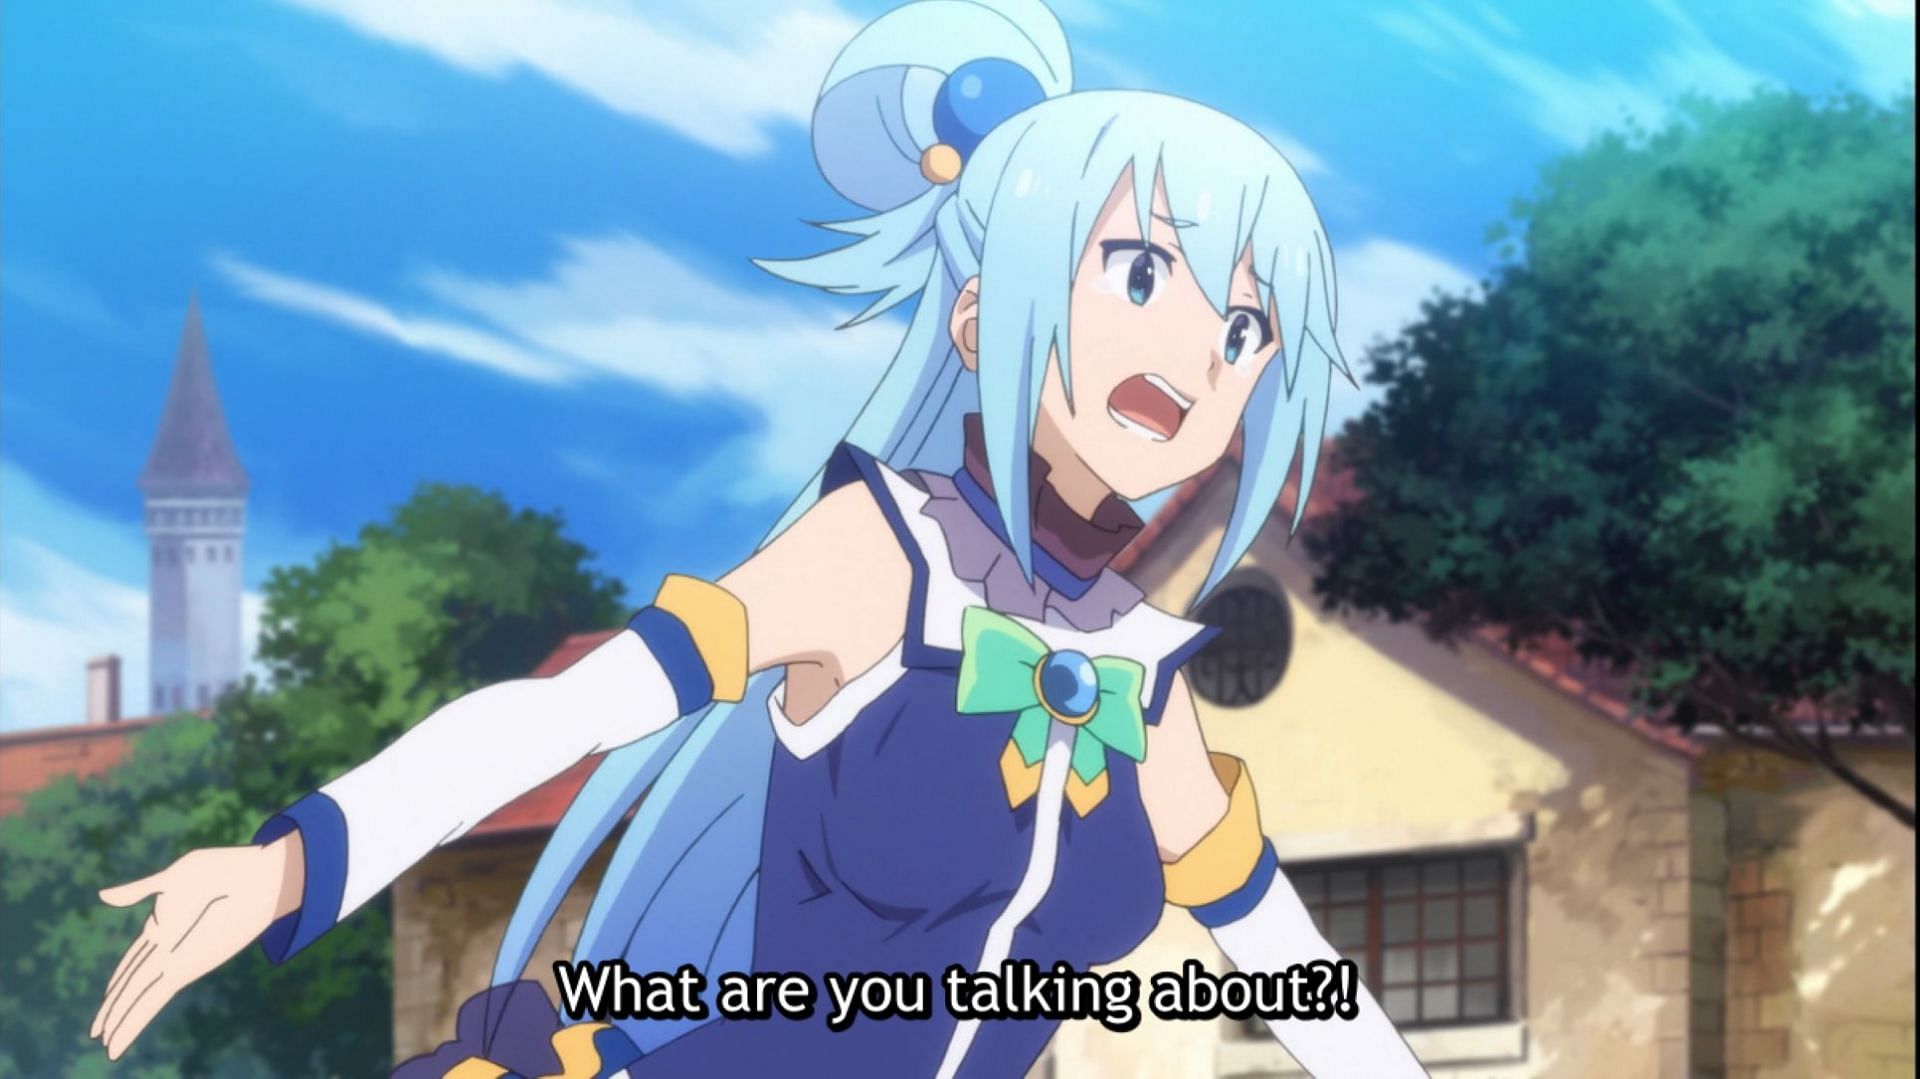 Aqua asking anime fans an important question (Image via Studio Deen)